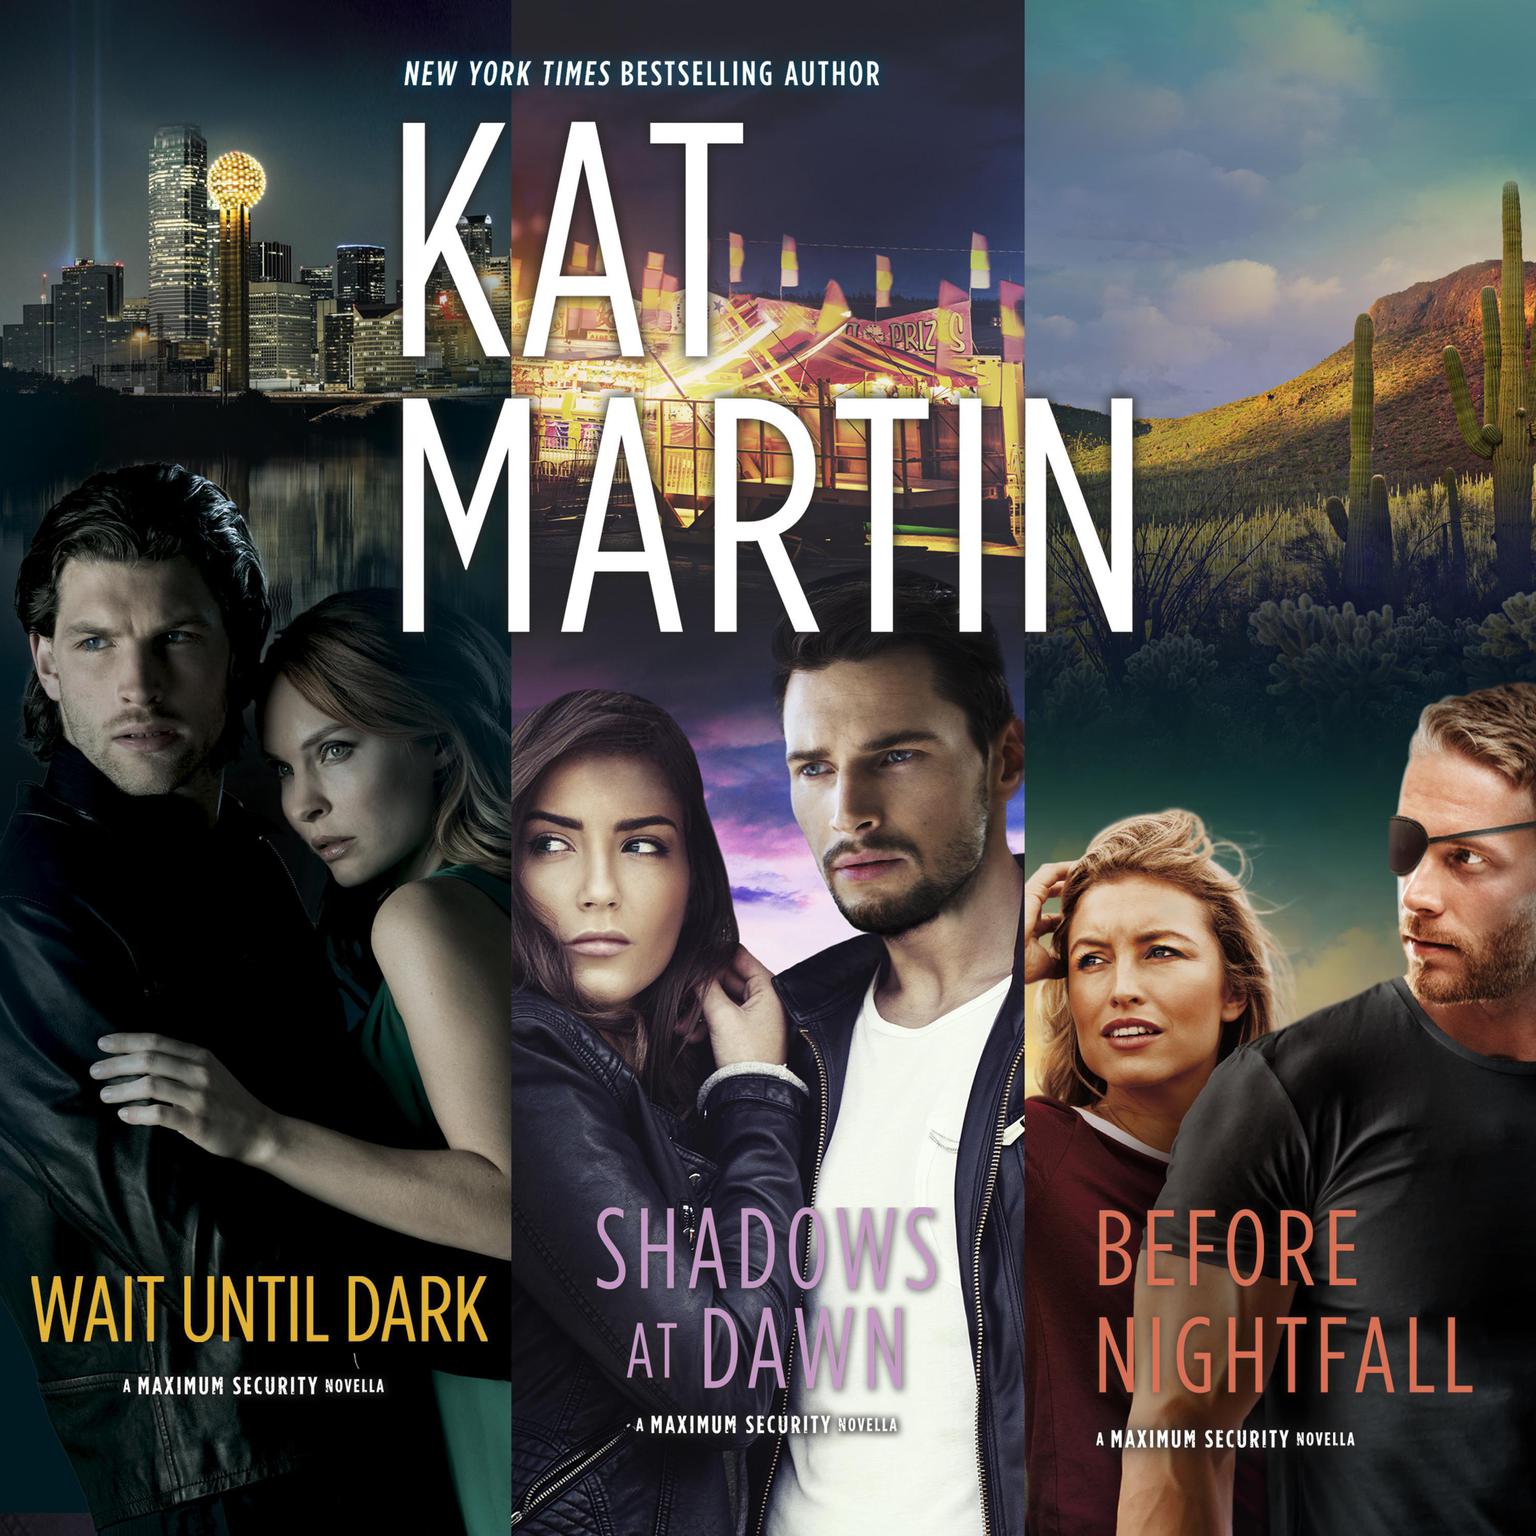 Wait Until Dark & Shadows at Dawn & Before Nightfall Audiobook, by Kat Martin